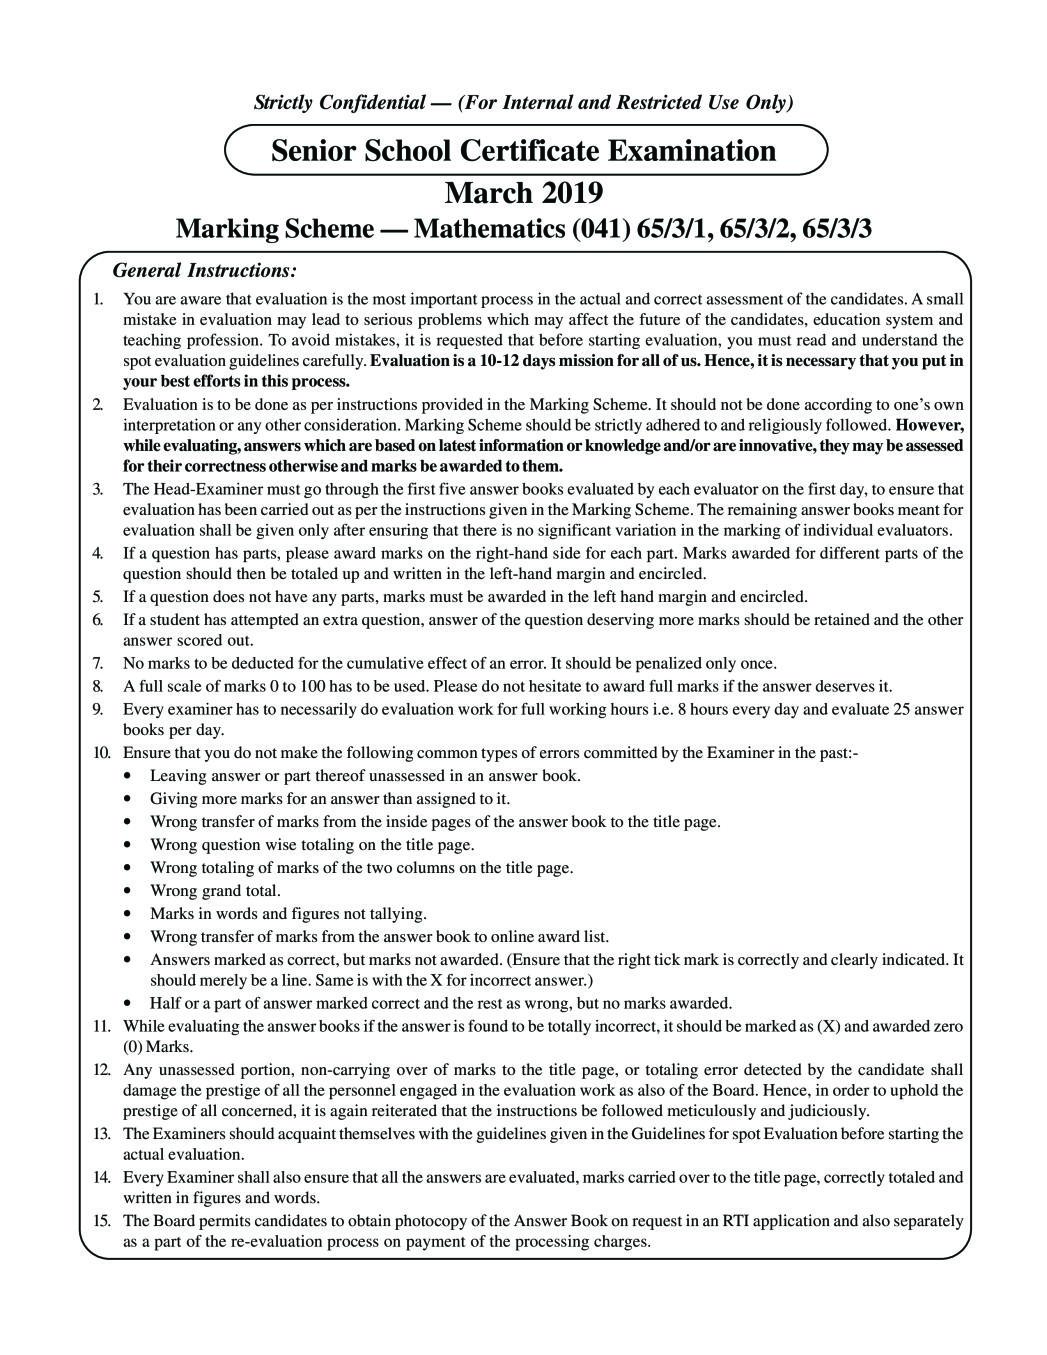 CBSE Class 12 Mathematics Question Paper 2019 Set 3 Solutions - Page 1